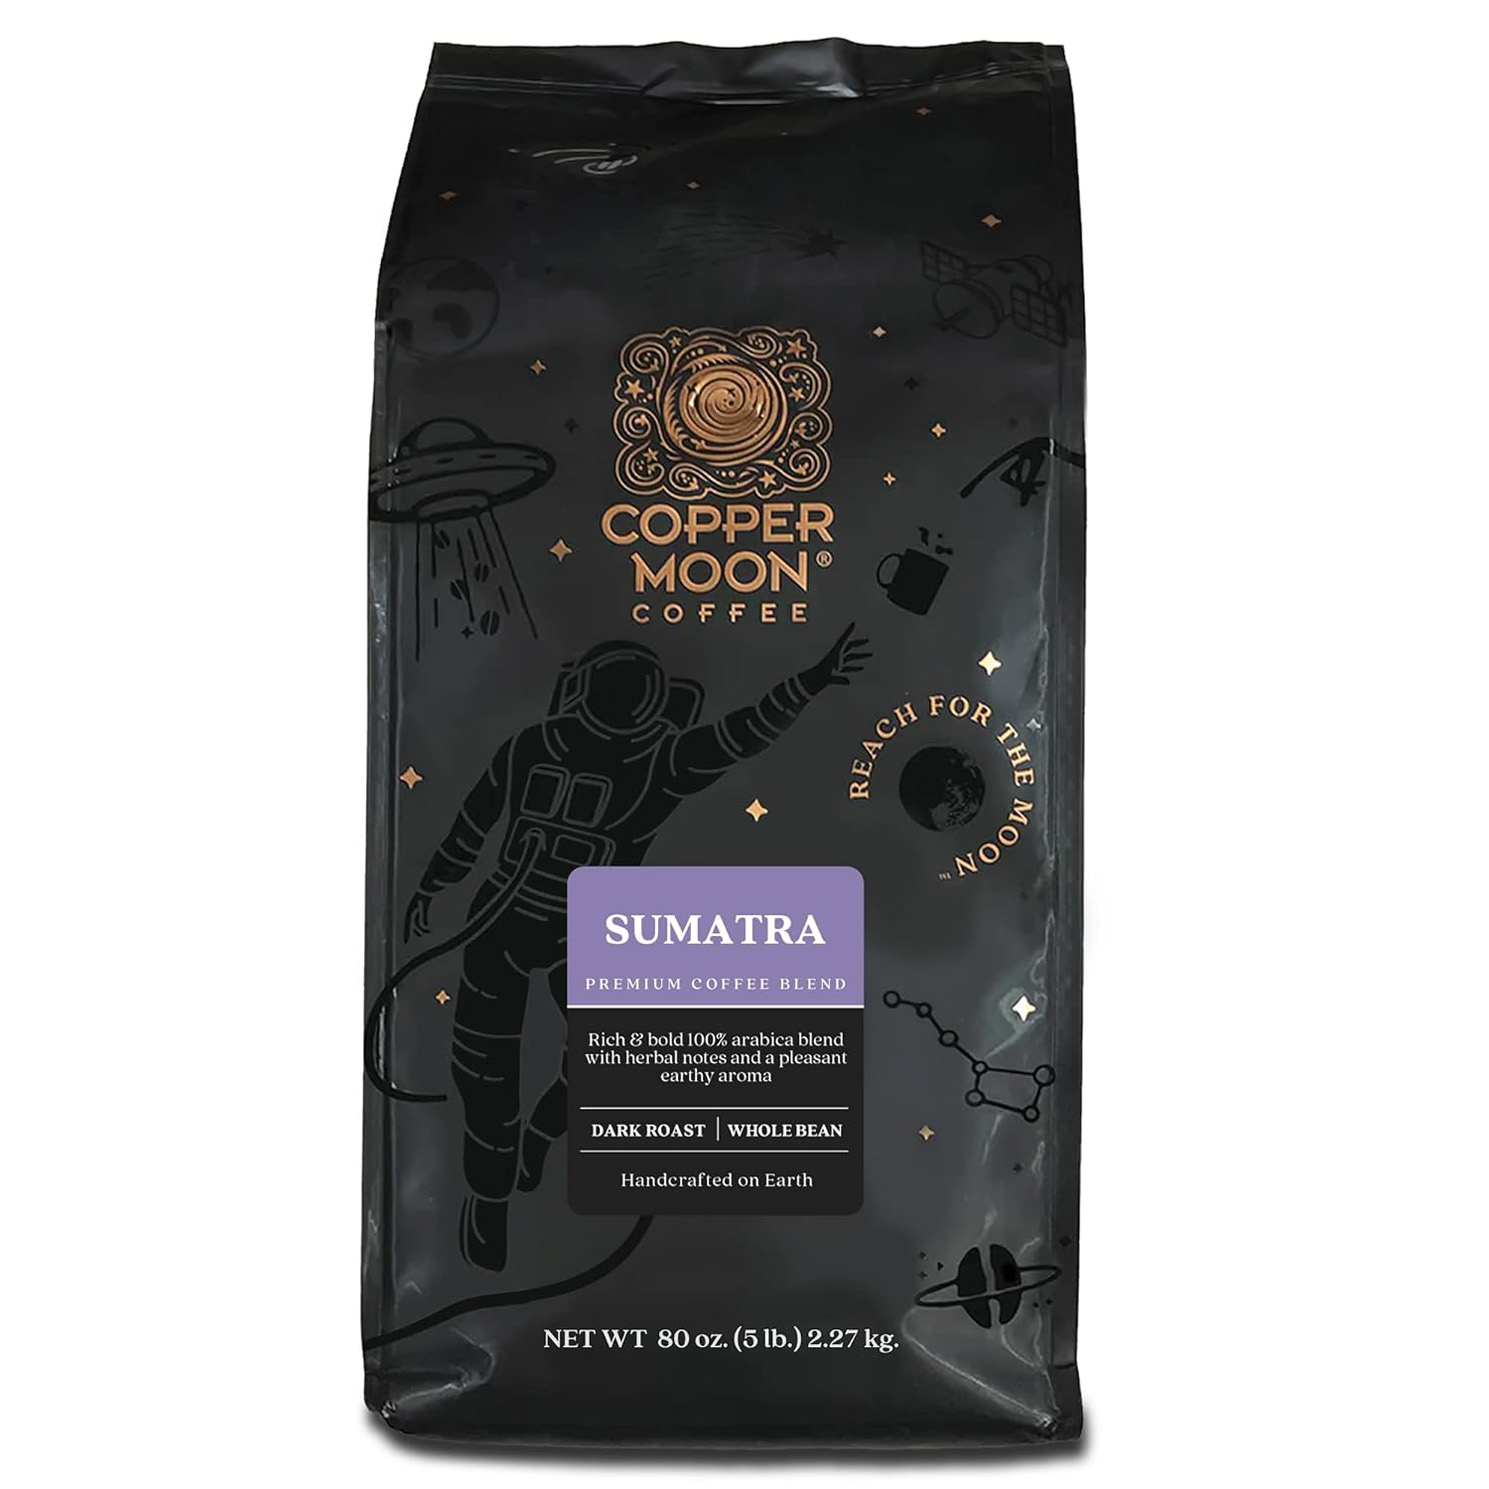 Copper Moon Whole Bean Coffee, Dark Roast, Sumatra Blend